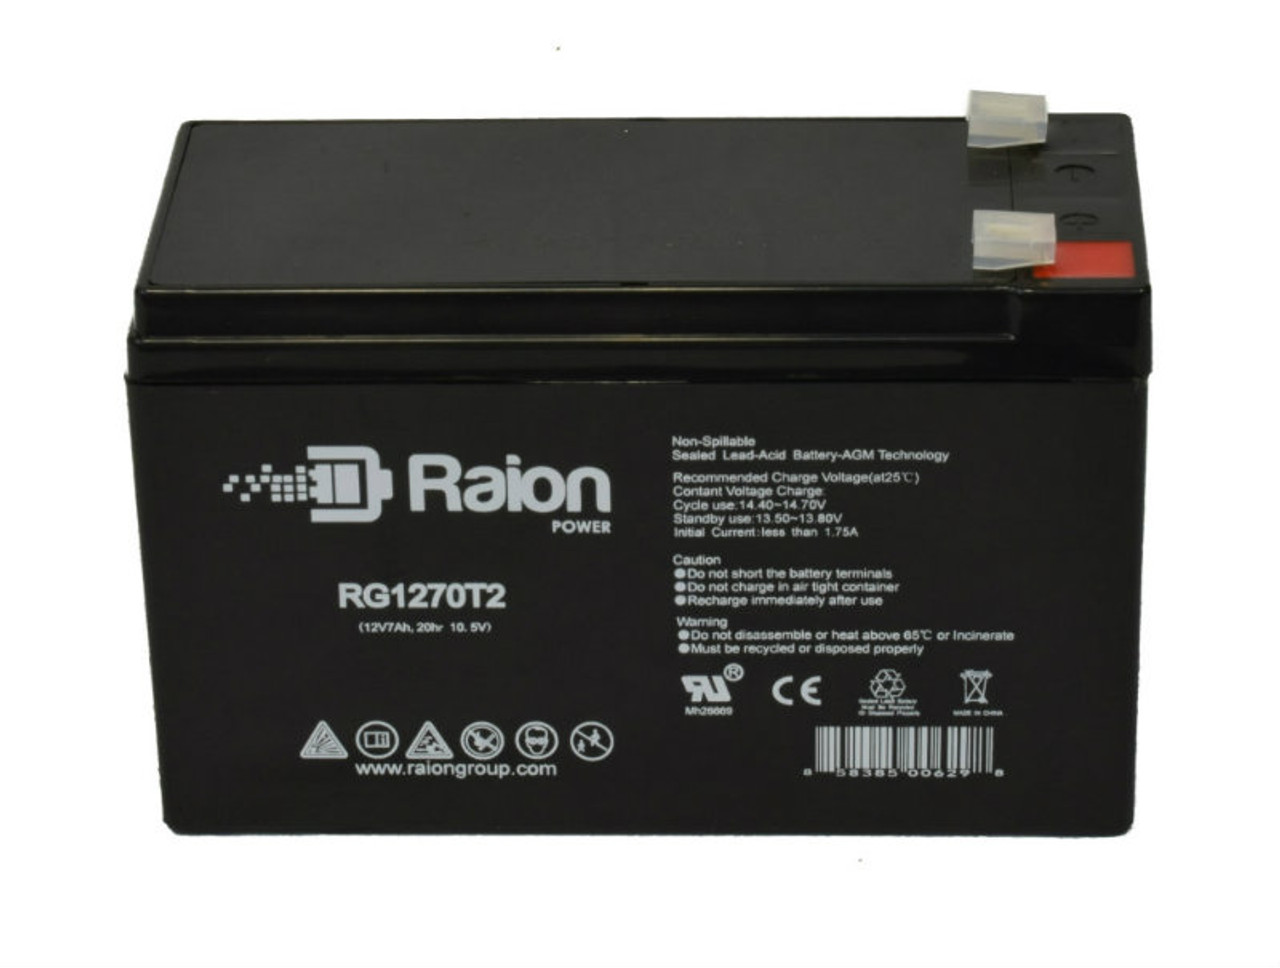 Raion Power RG1270T1 12V 7Ah Lead Acid Battery for MHB MS7-12A F1